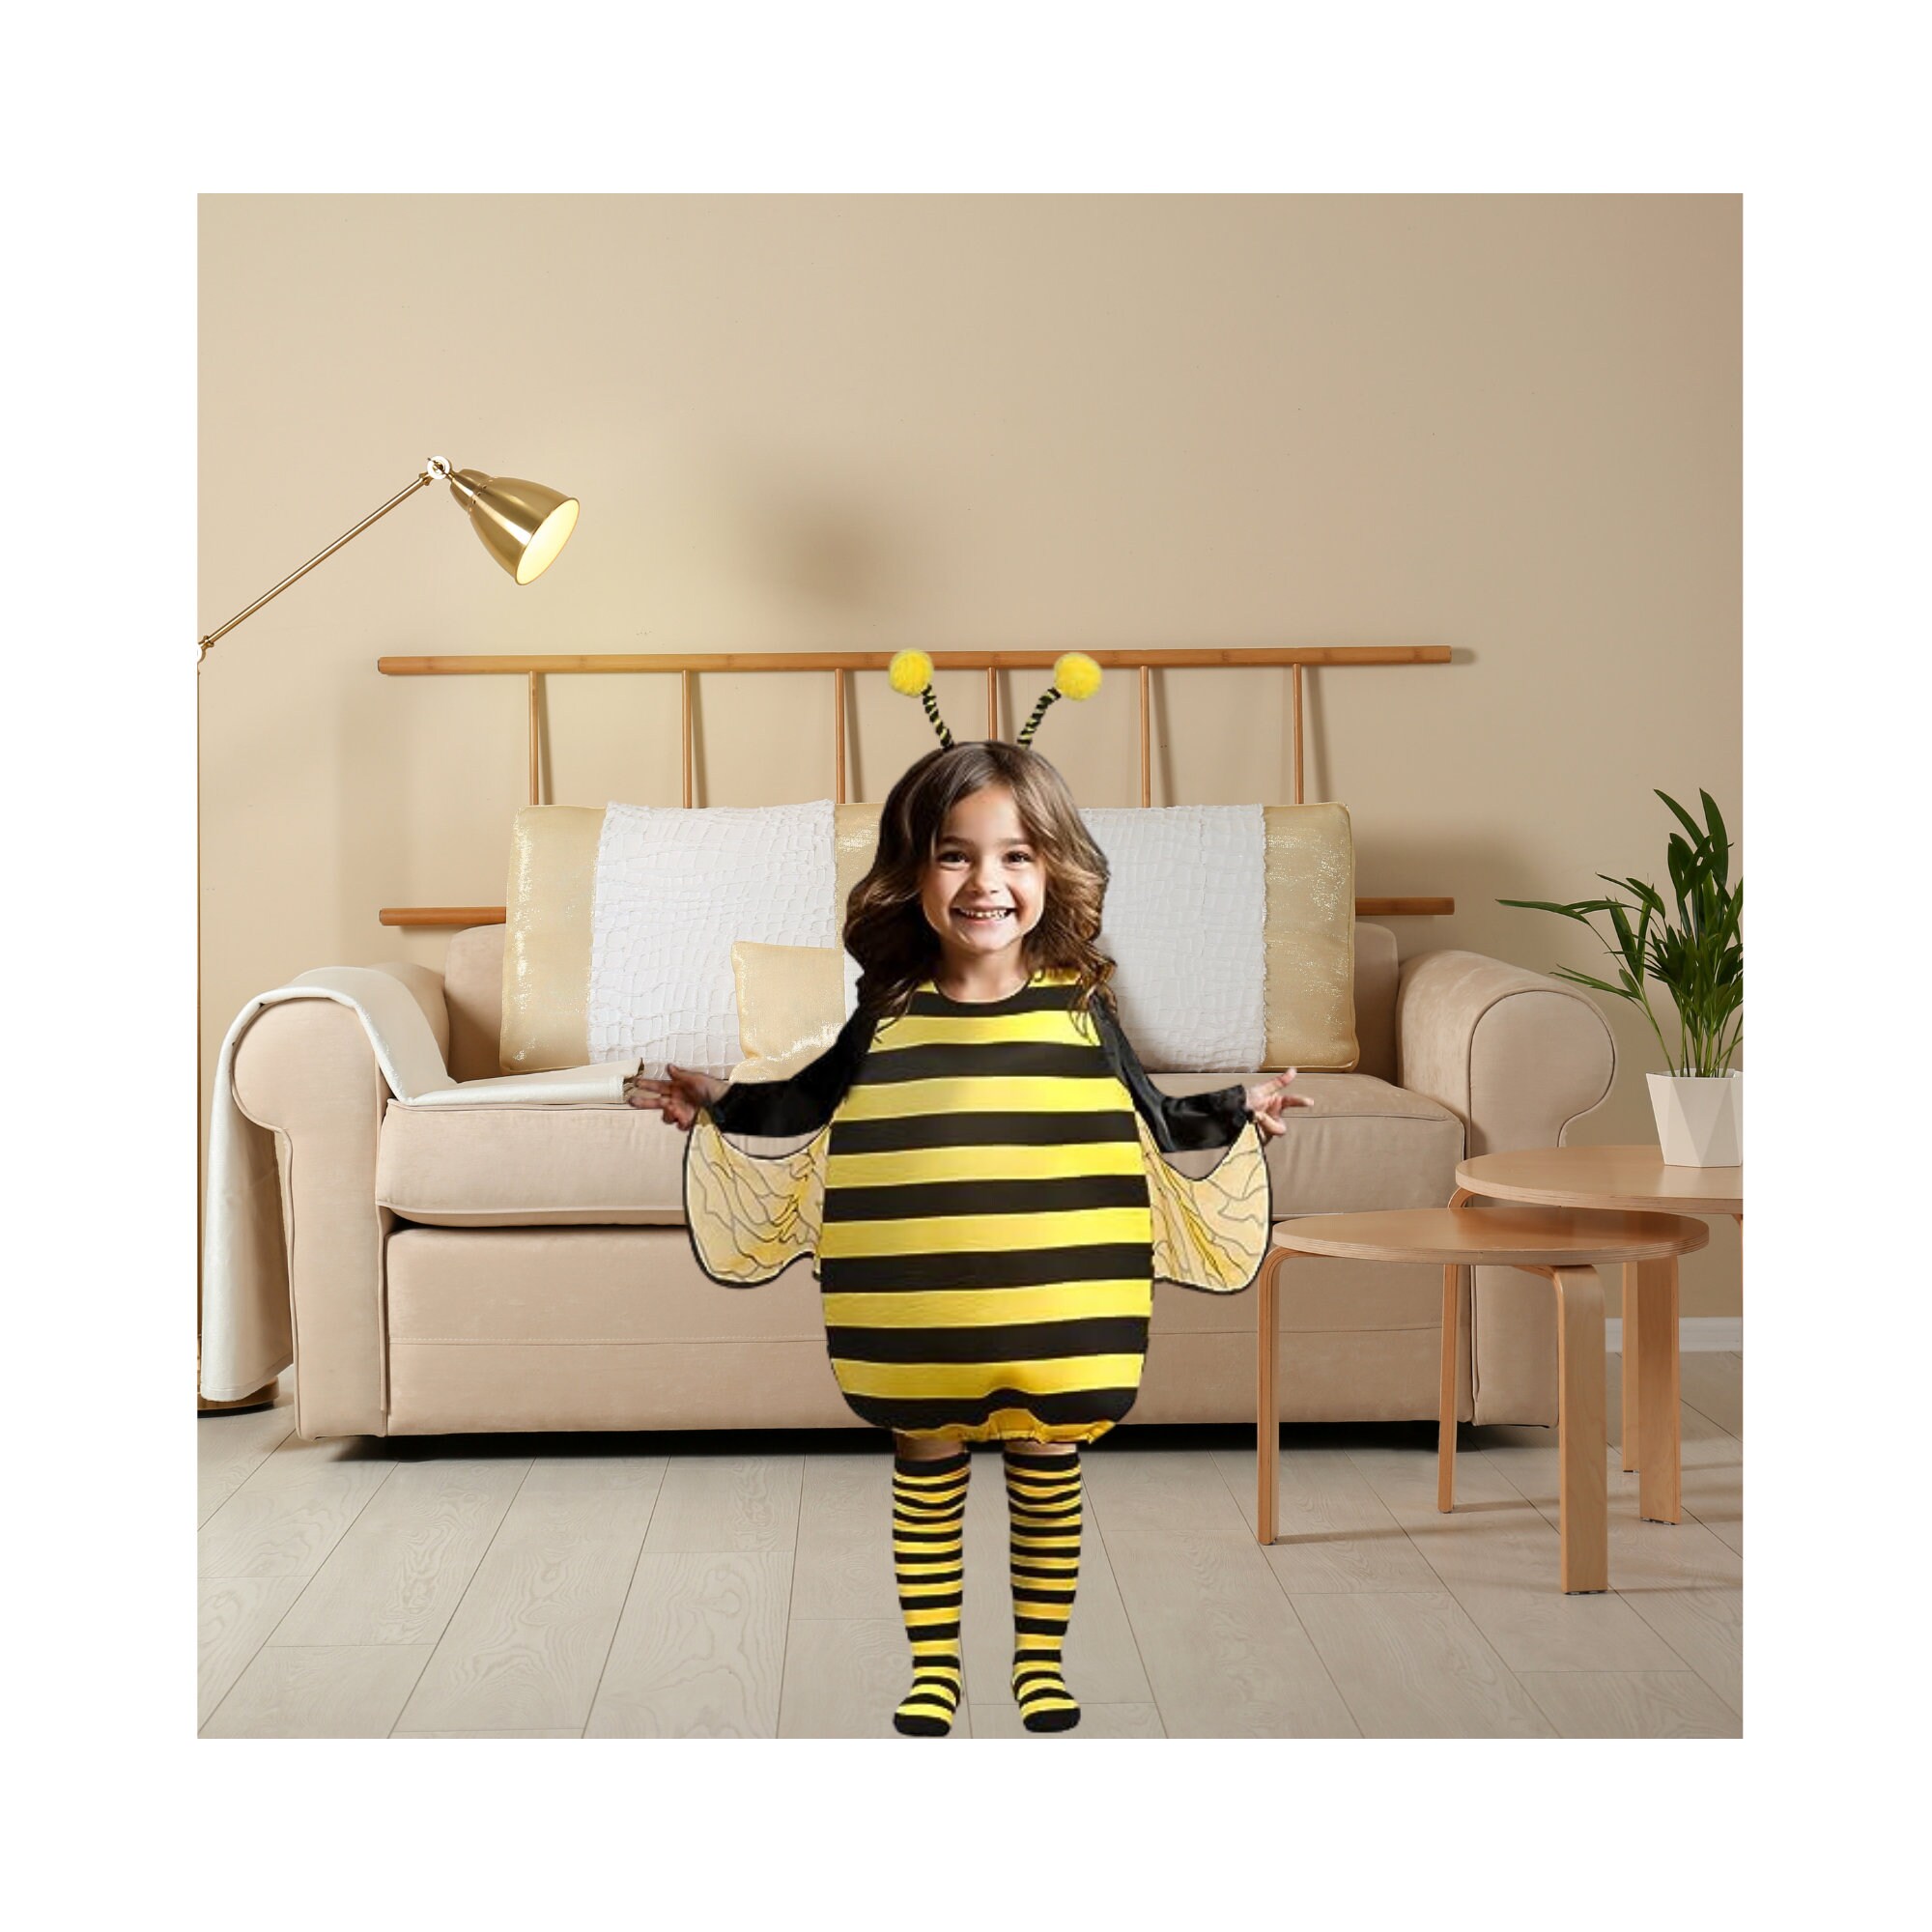 Funcredible Bumble Bee Costume Accessories | Bee Wings and Bee Antenna  Headband with Bee Glasses | Honey Bee Costumes | Halloween Bumblebee  Cosplay